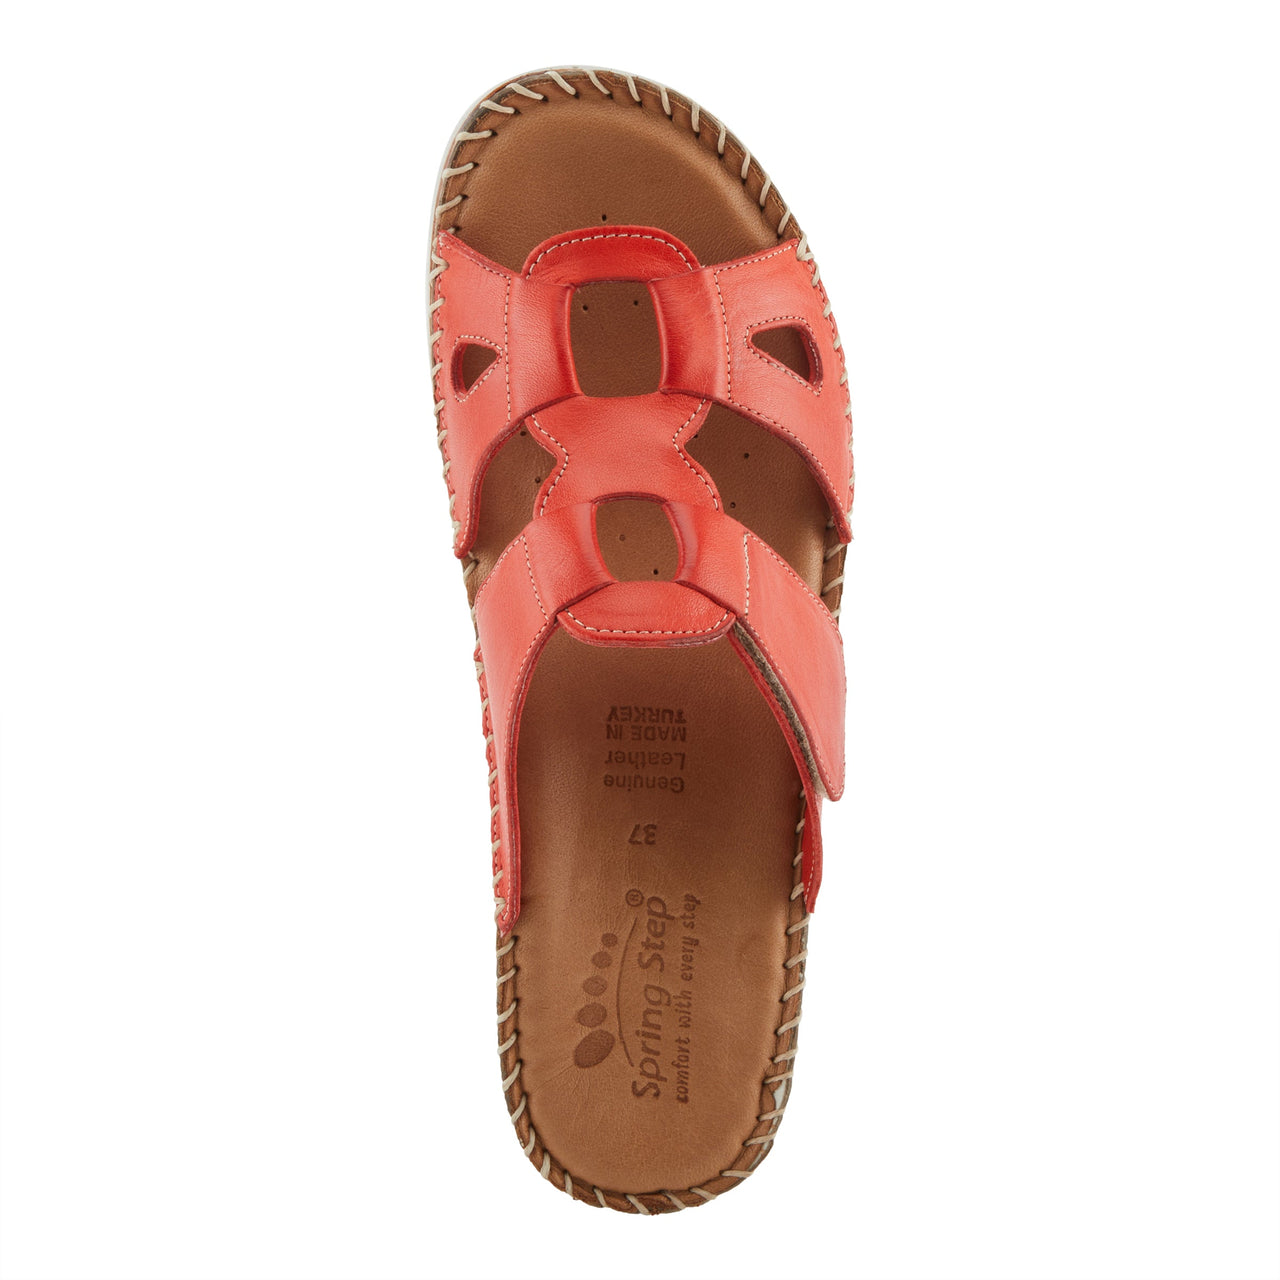  Comfortable Spring Step Montera Sandals in Beige with Adjustable Straps